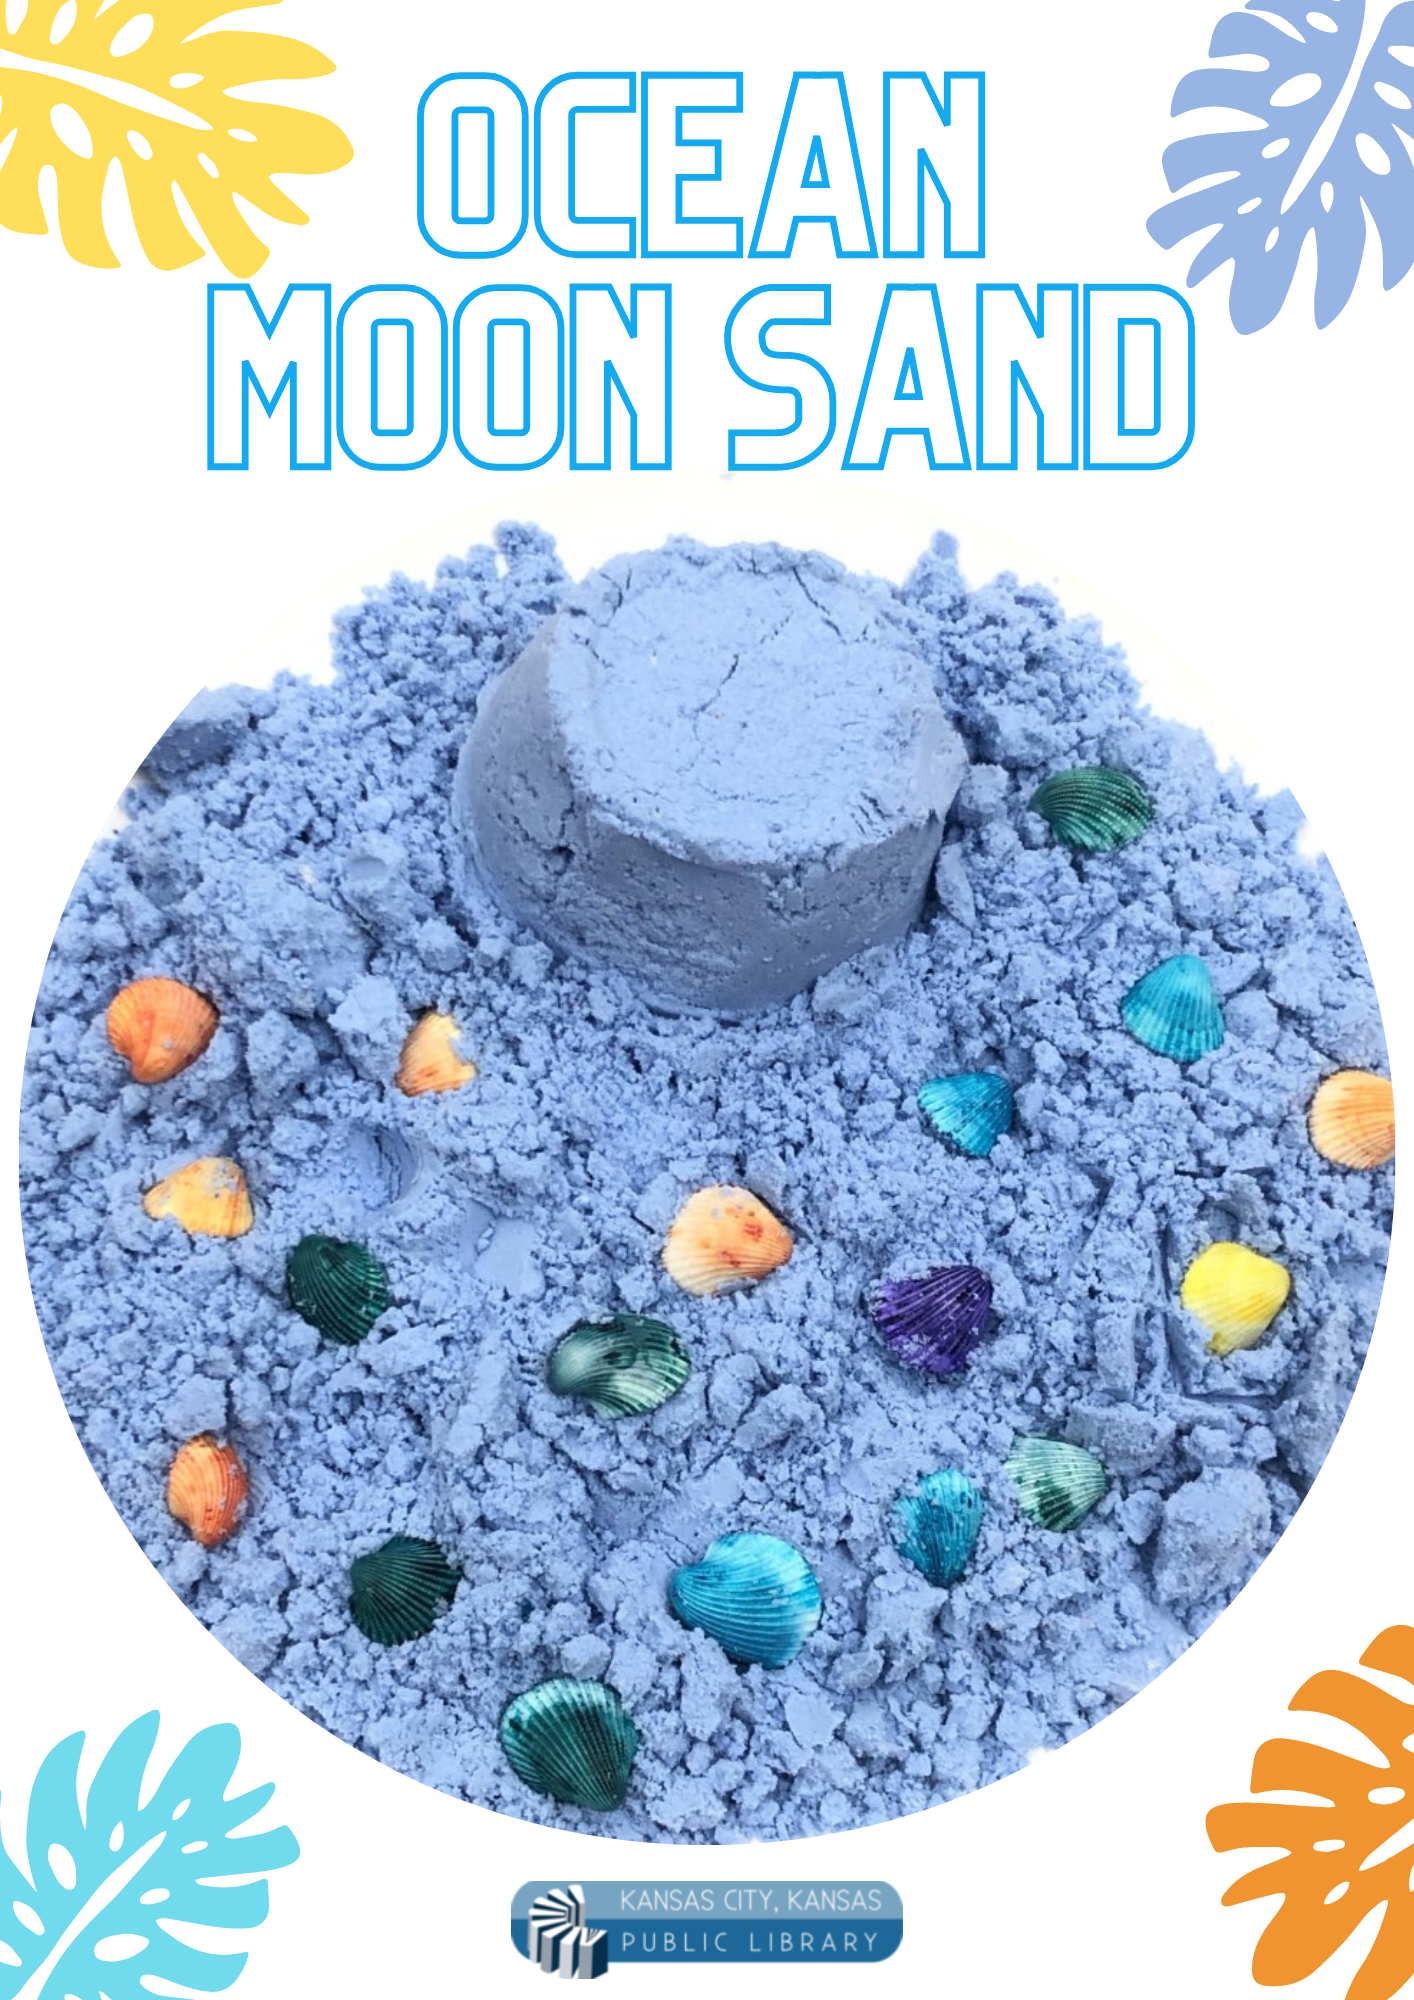 DIY blue moon sand with sea shells. 